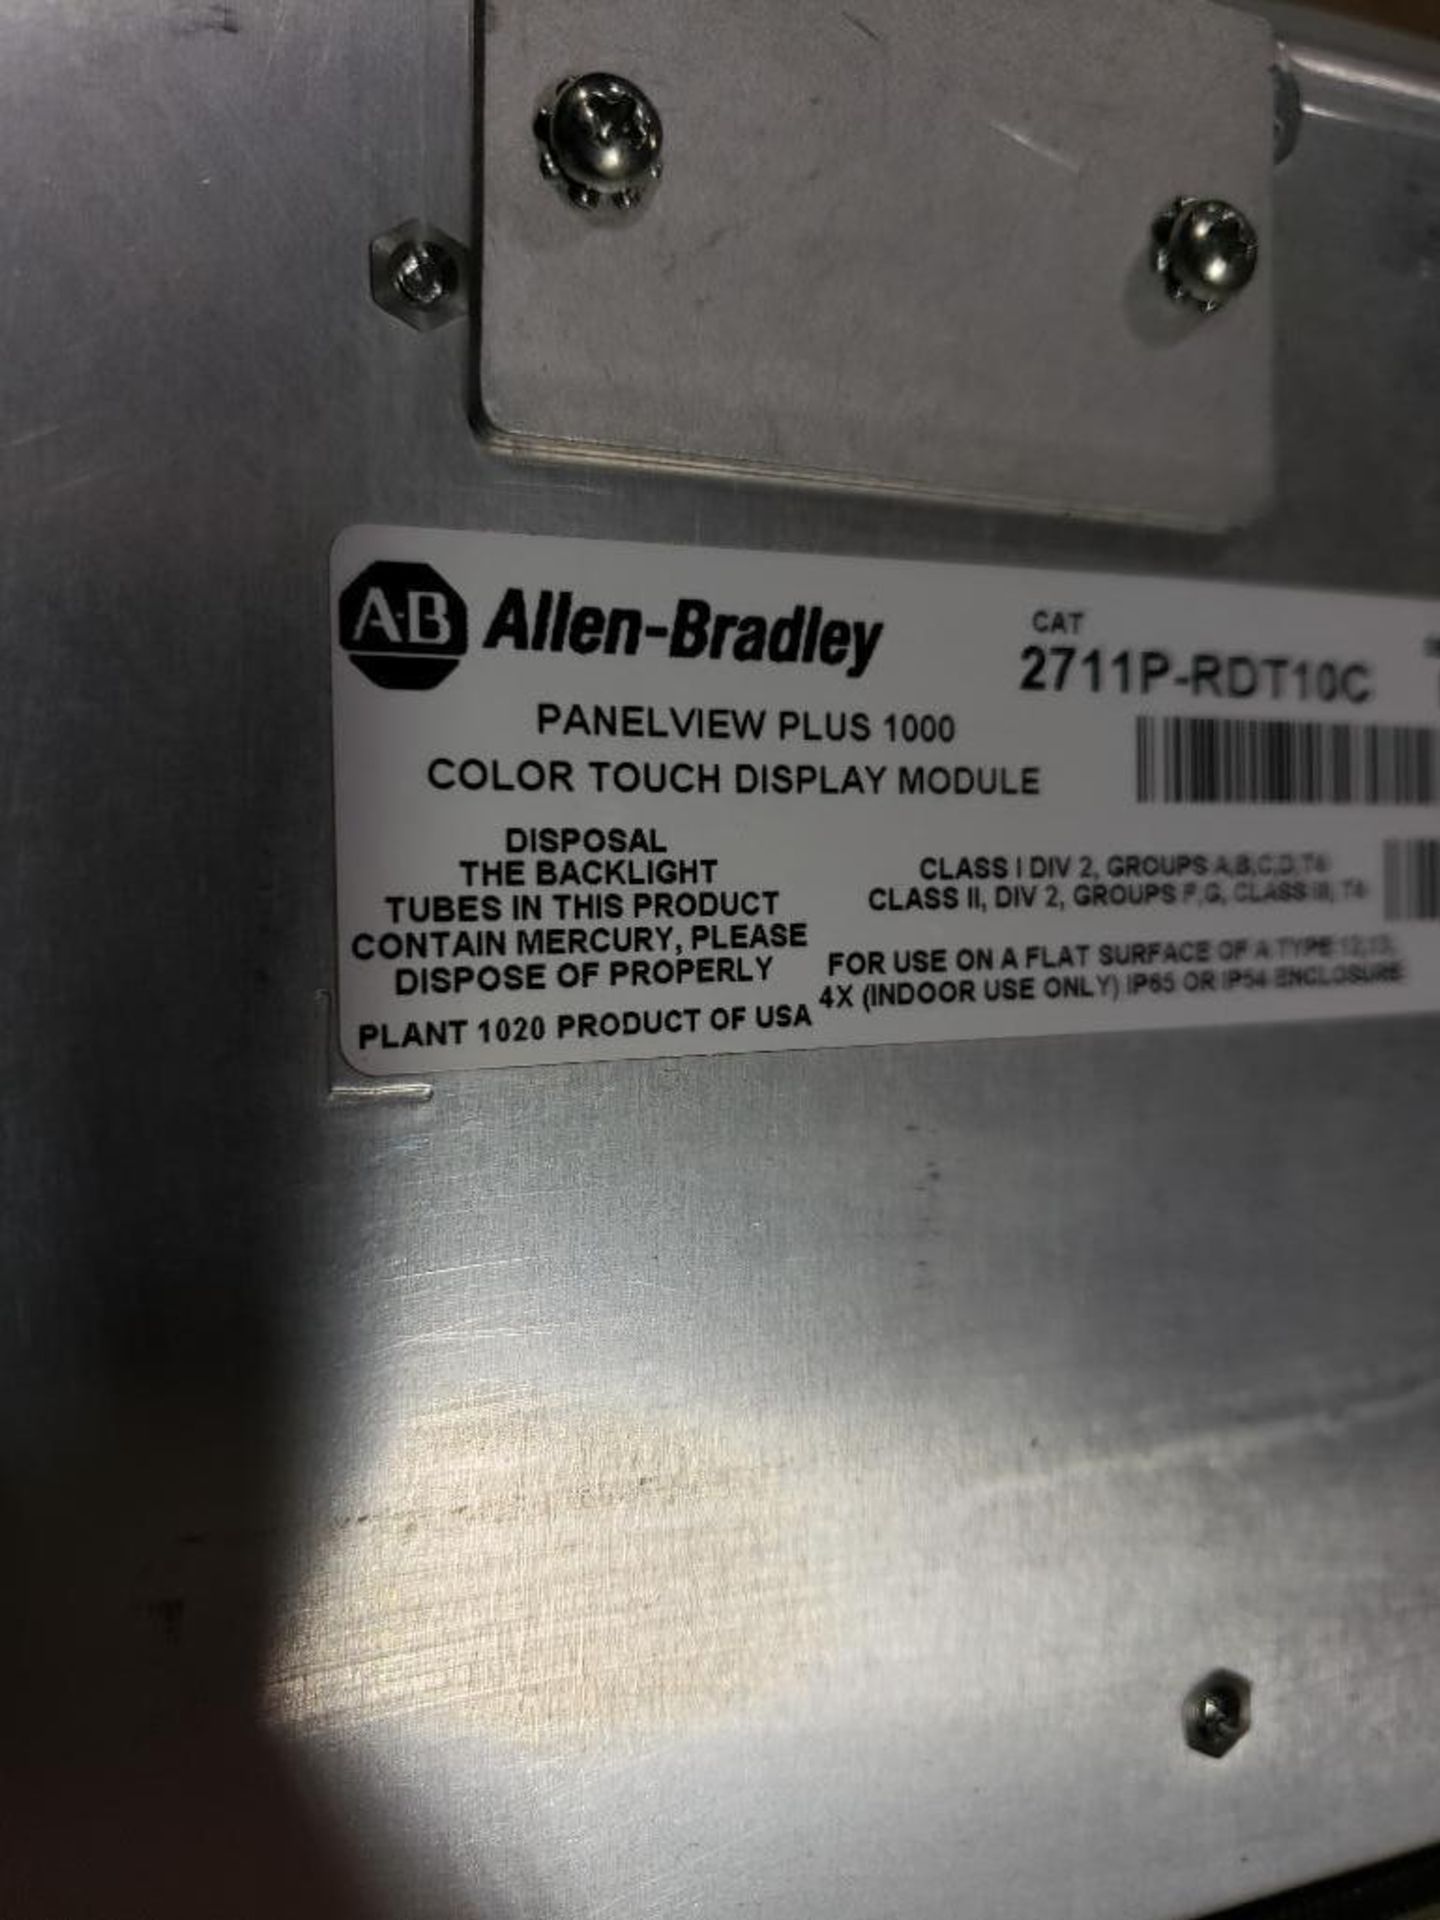 Allen Bradley PanelView Plus 1000. 2711P-RDT10C color touch display module. - Image 7 of 8